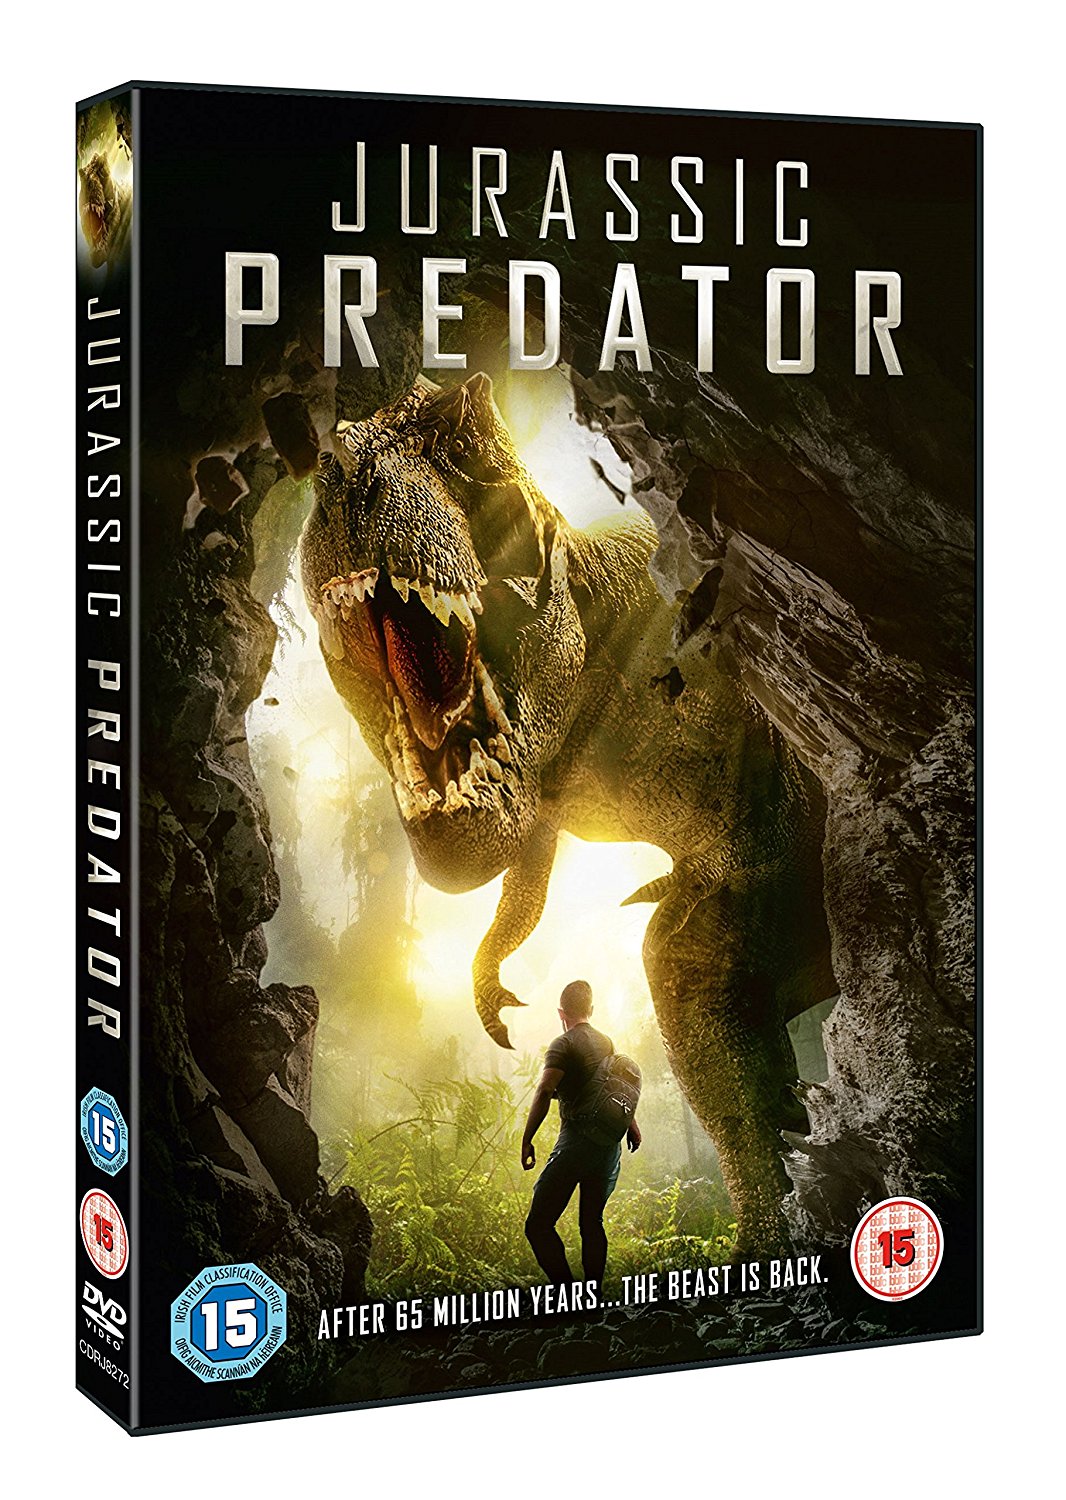 Jurassic Predator - UK DVD art